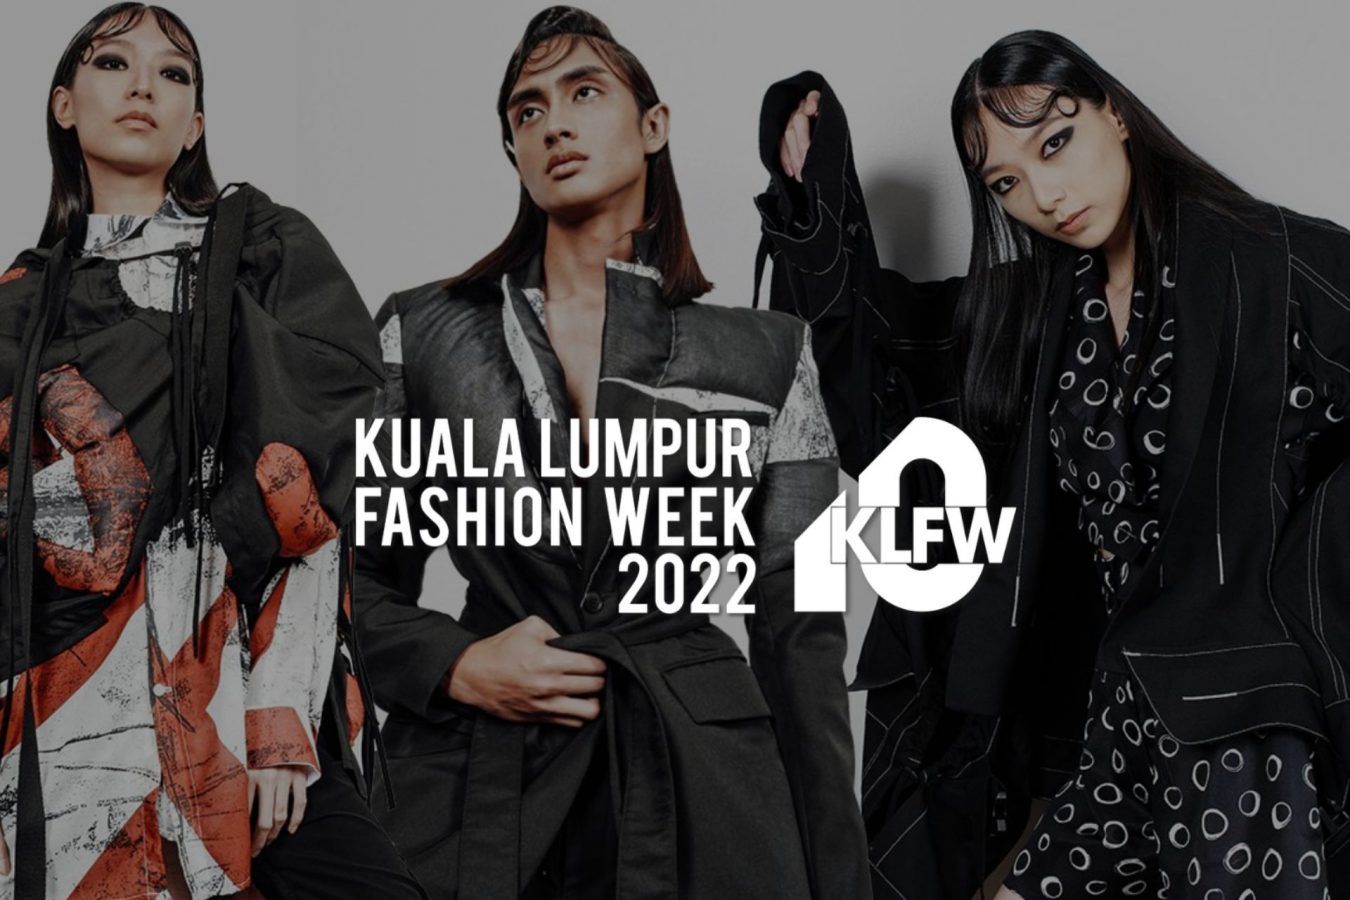 Kuala Lumpur Fashion Week is celebrating its 10th anniversary this year